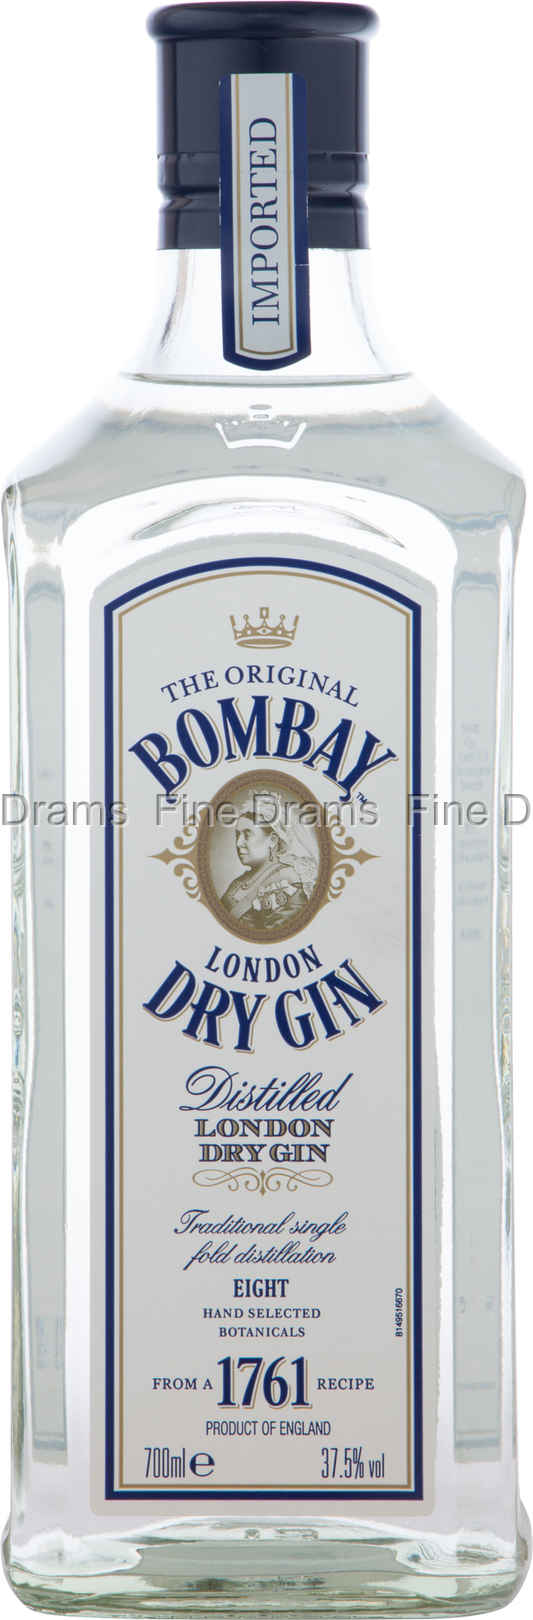 Bombay Original Dry Gin London